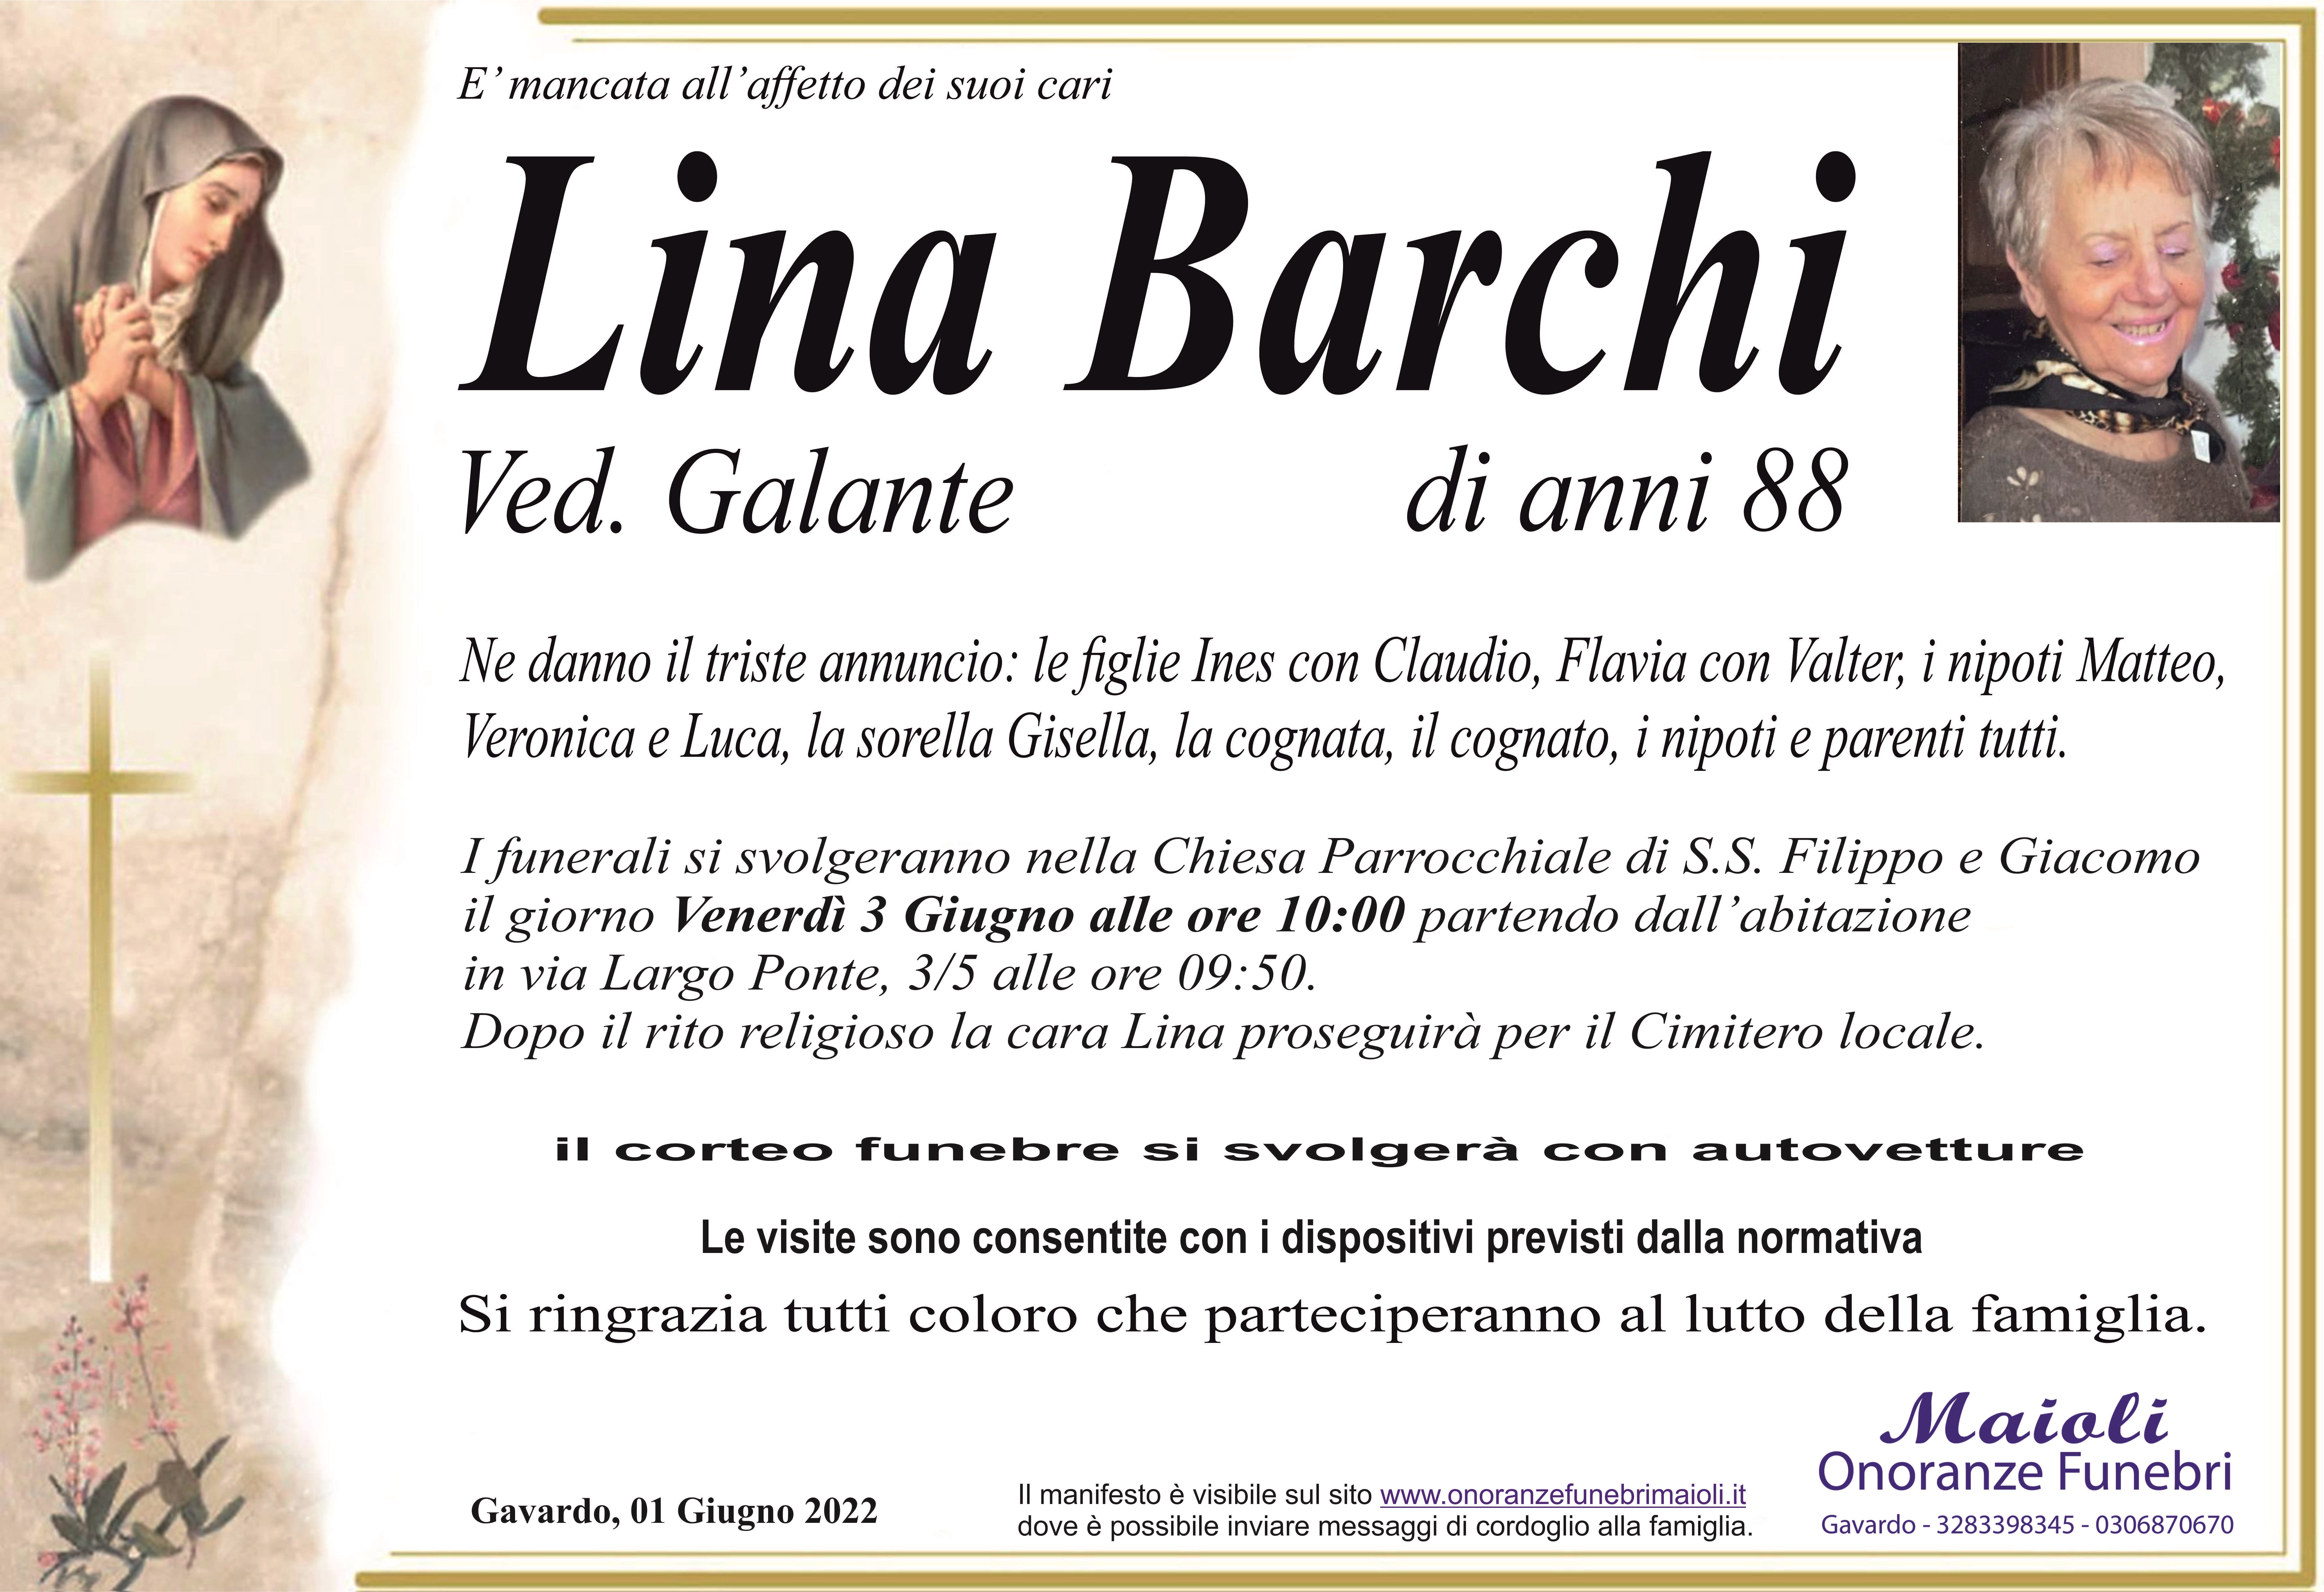 Lina Barchi